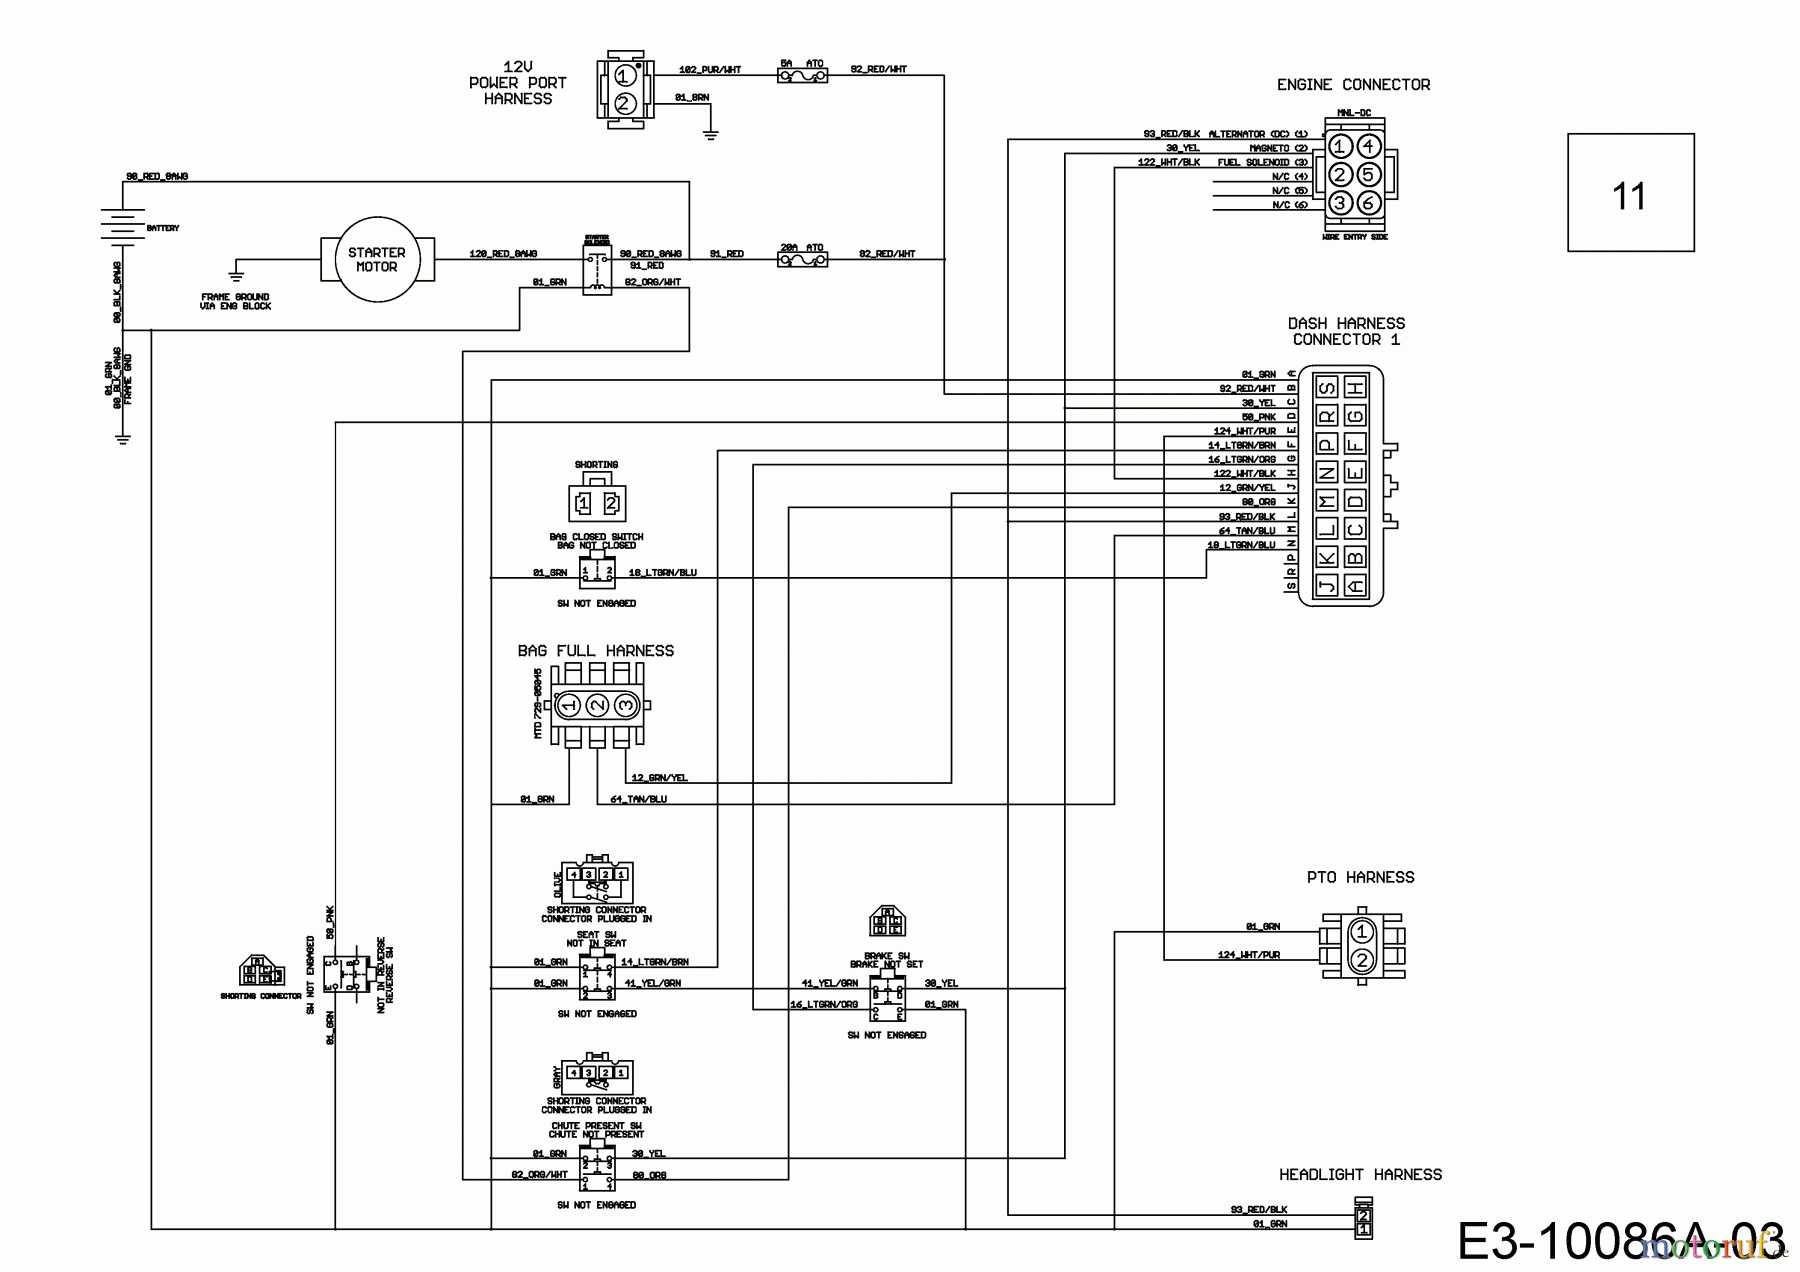  Wolf-Garten Lawn tractors 95.180 H 13ATA1VB650  (2017) Main wiring diagram